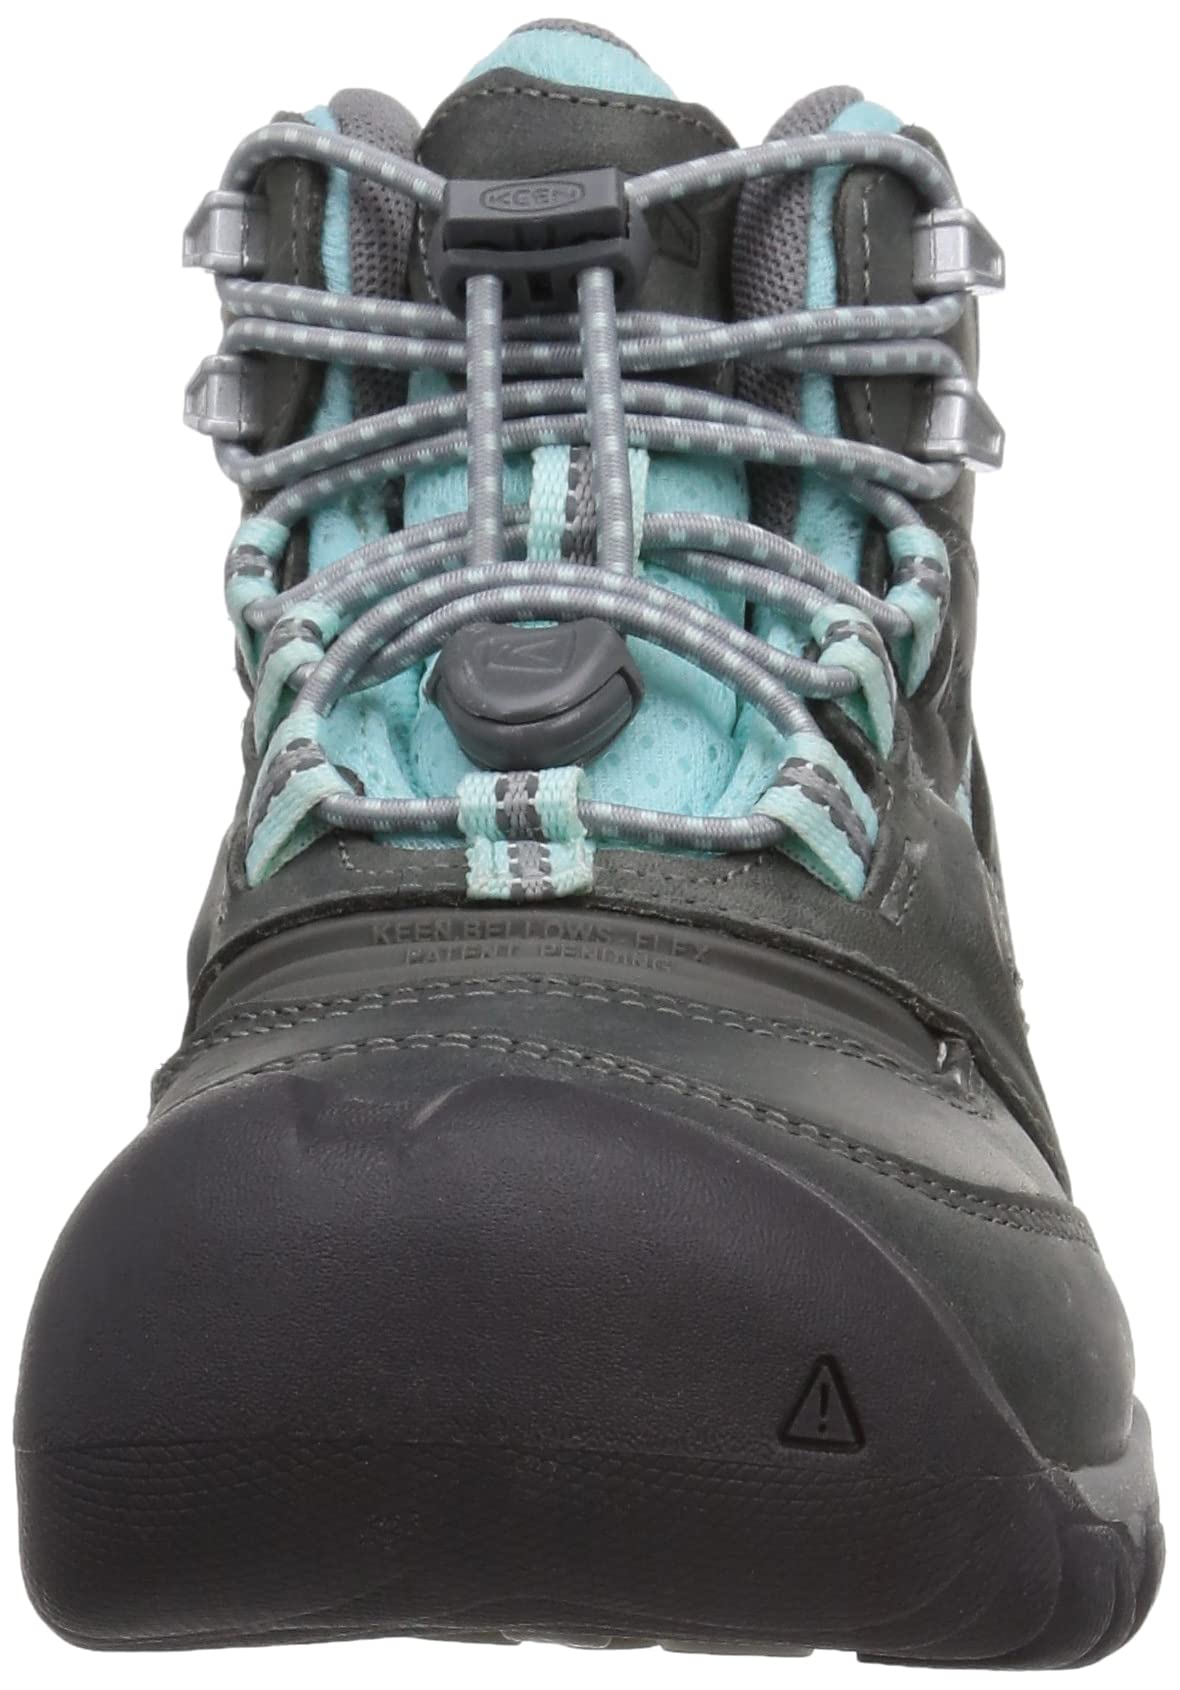 KEEN Unisex-Child Ridge Flex Mid Height Waterproof Leather Hiking Boots